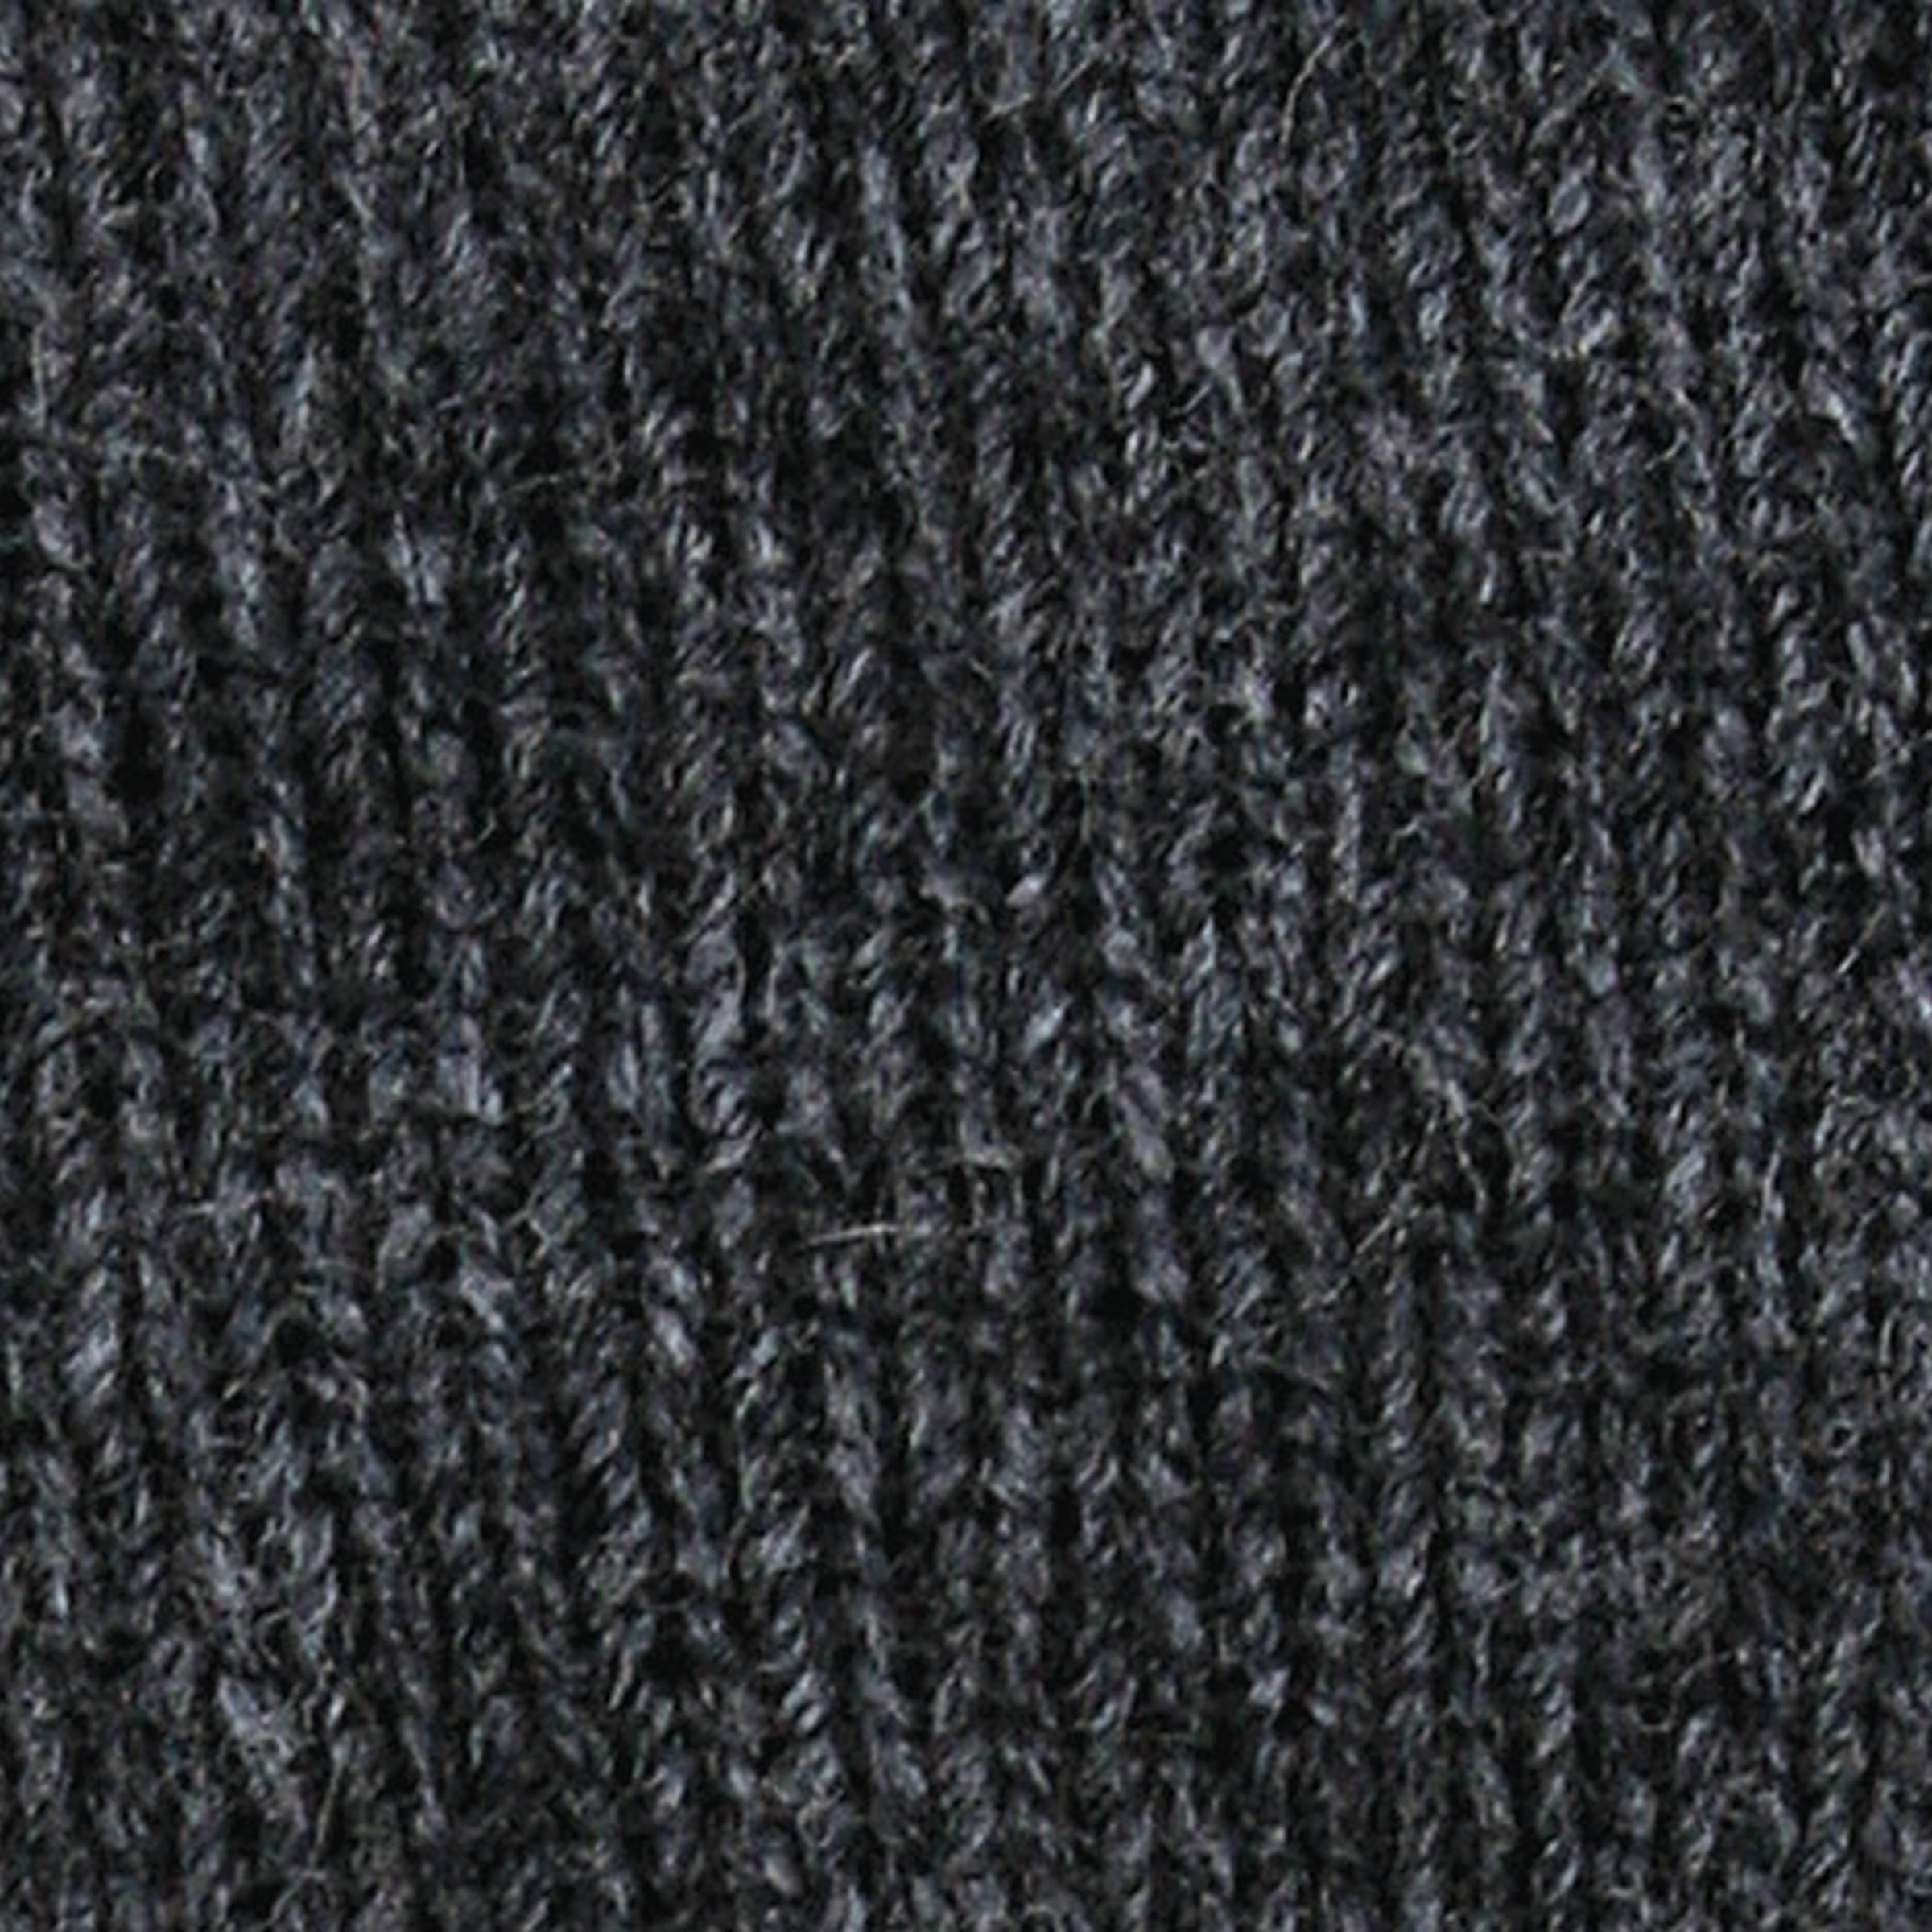 Possum Merino Health Sock - Lothlorian Knitwear